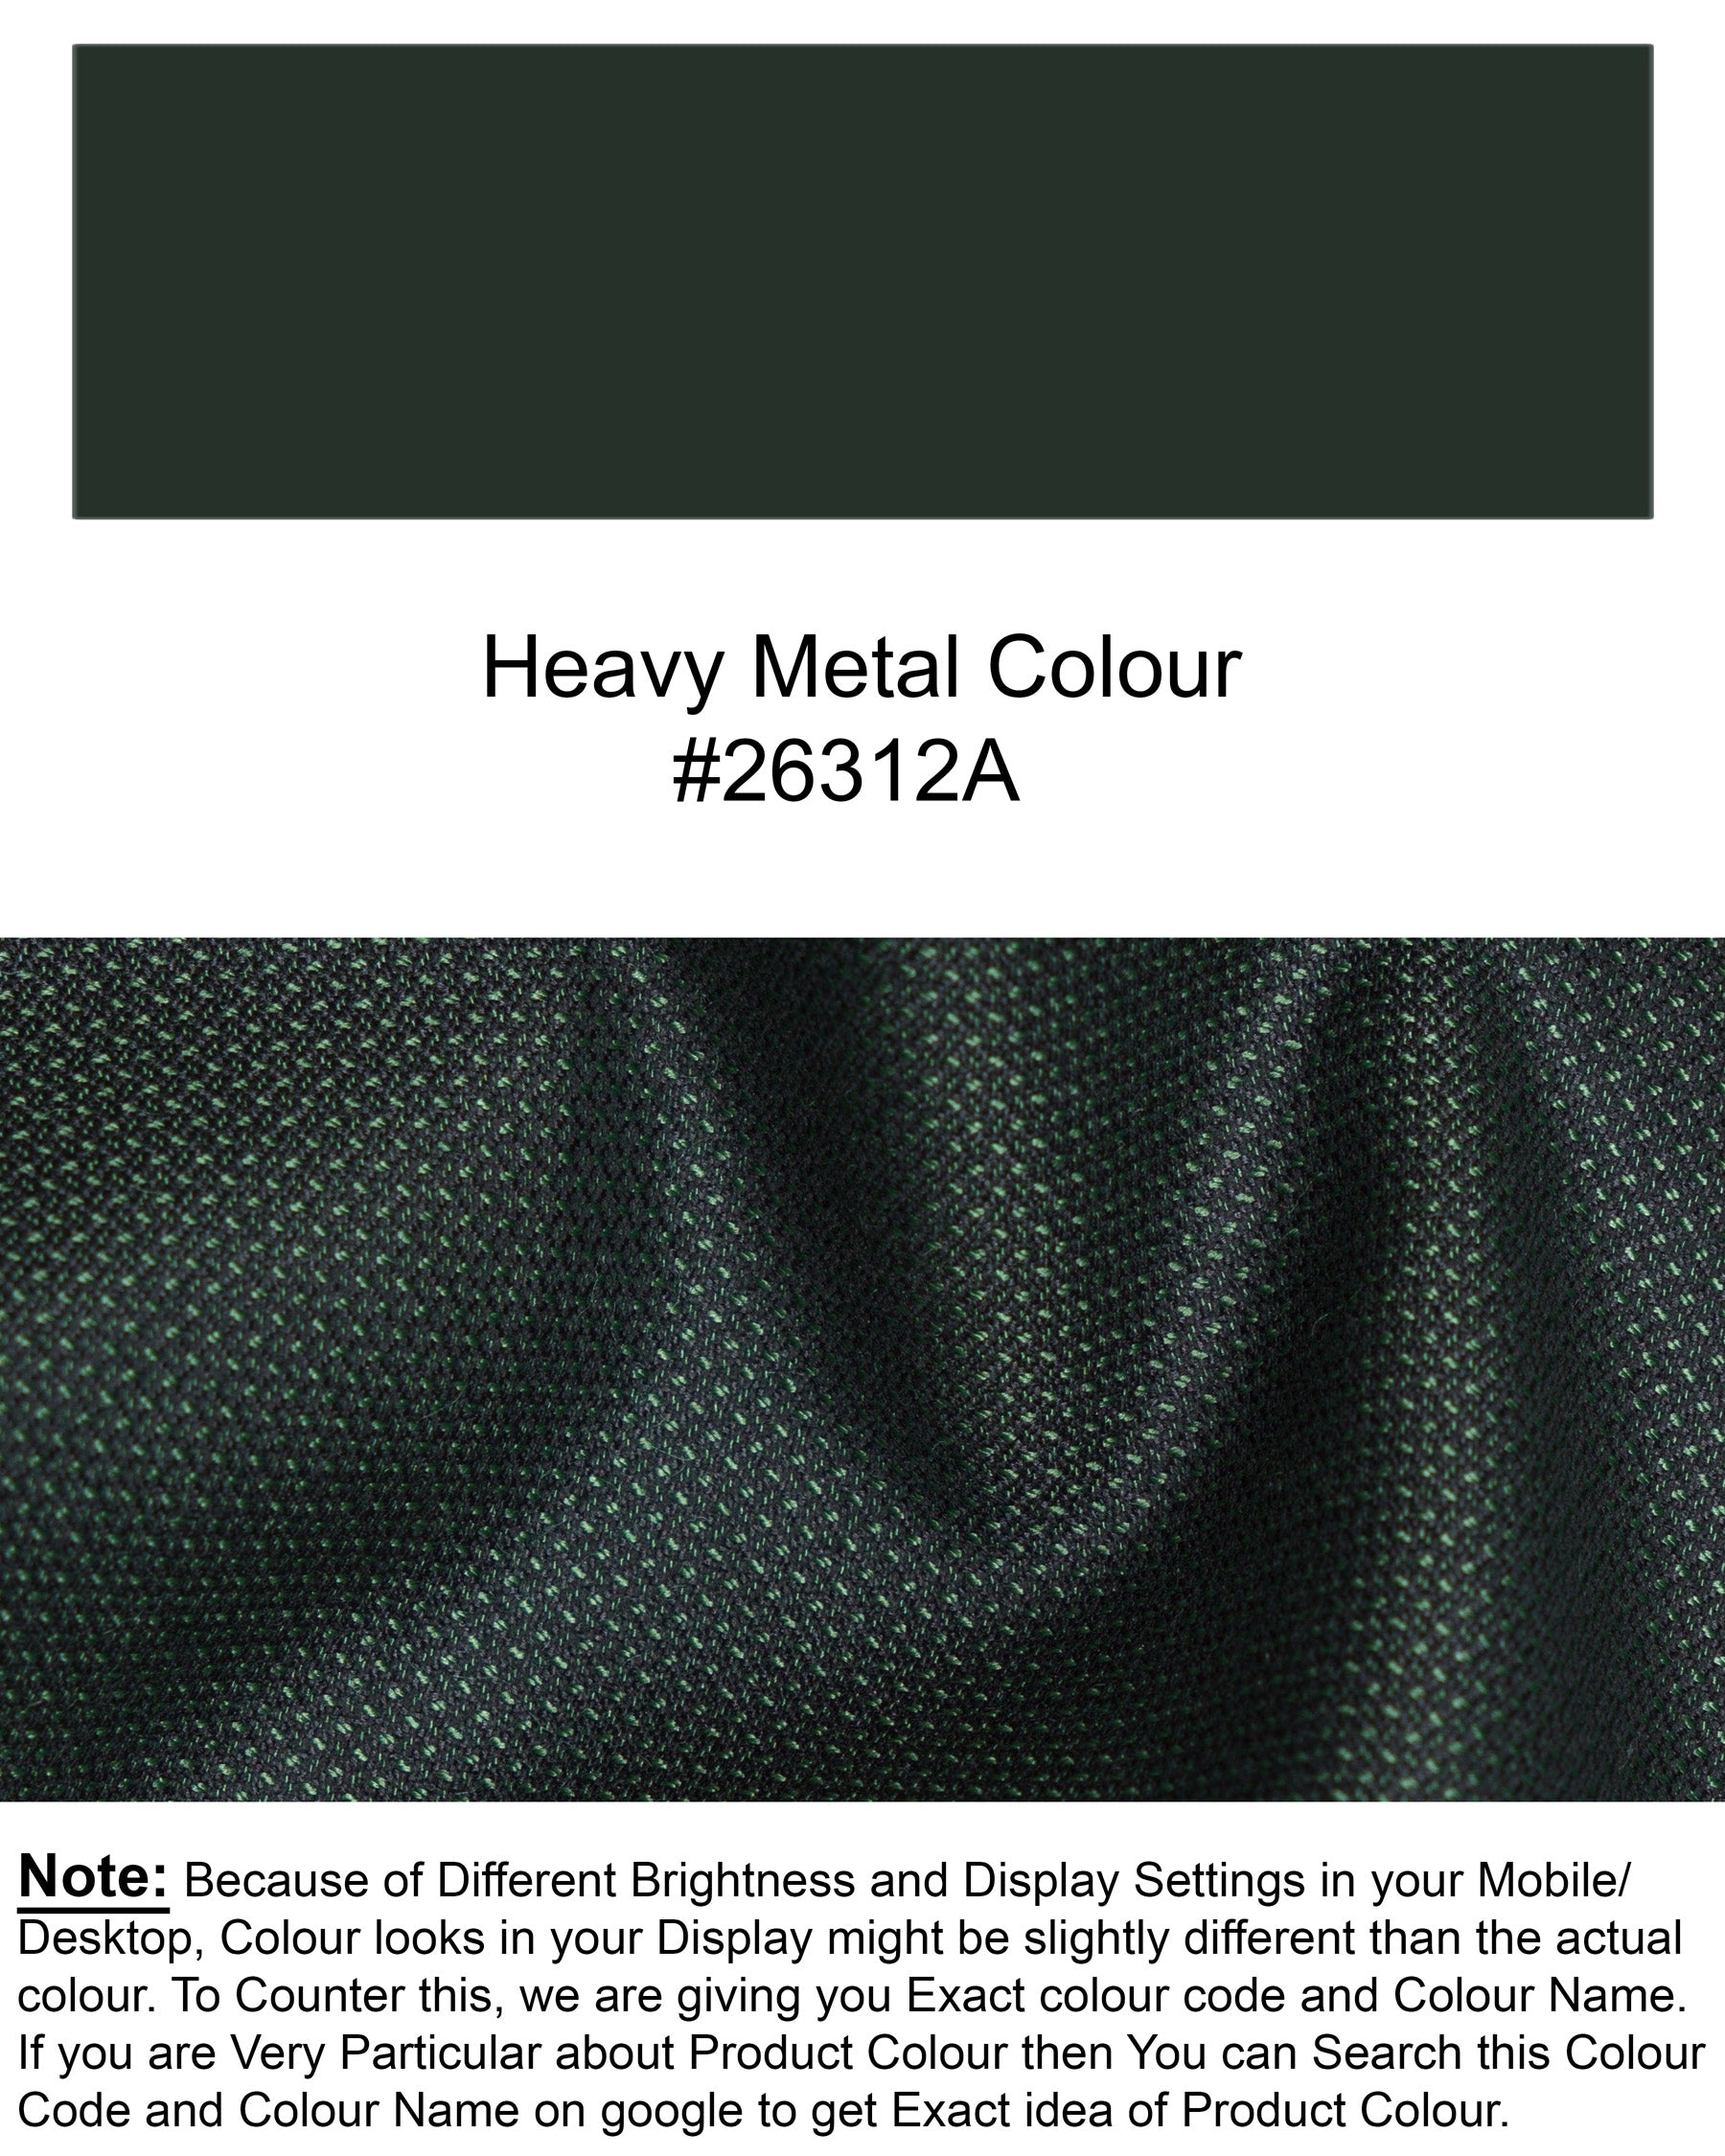 Heavy Metal Green Wool Rich Bandhgala Blazer BL1397-BG-36, BL1397-BG-38, BL1397-BG-40, BL1397-BG-42, BL1397-BG-44, BL1397-BG-46, BL1397-BG-48, BL1397-BG-50, BL1397-BG-52, BL1397-BG-54, BL1397-BG-56, BL1397-BG-58, BL1397-BG-60